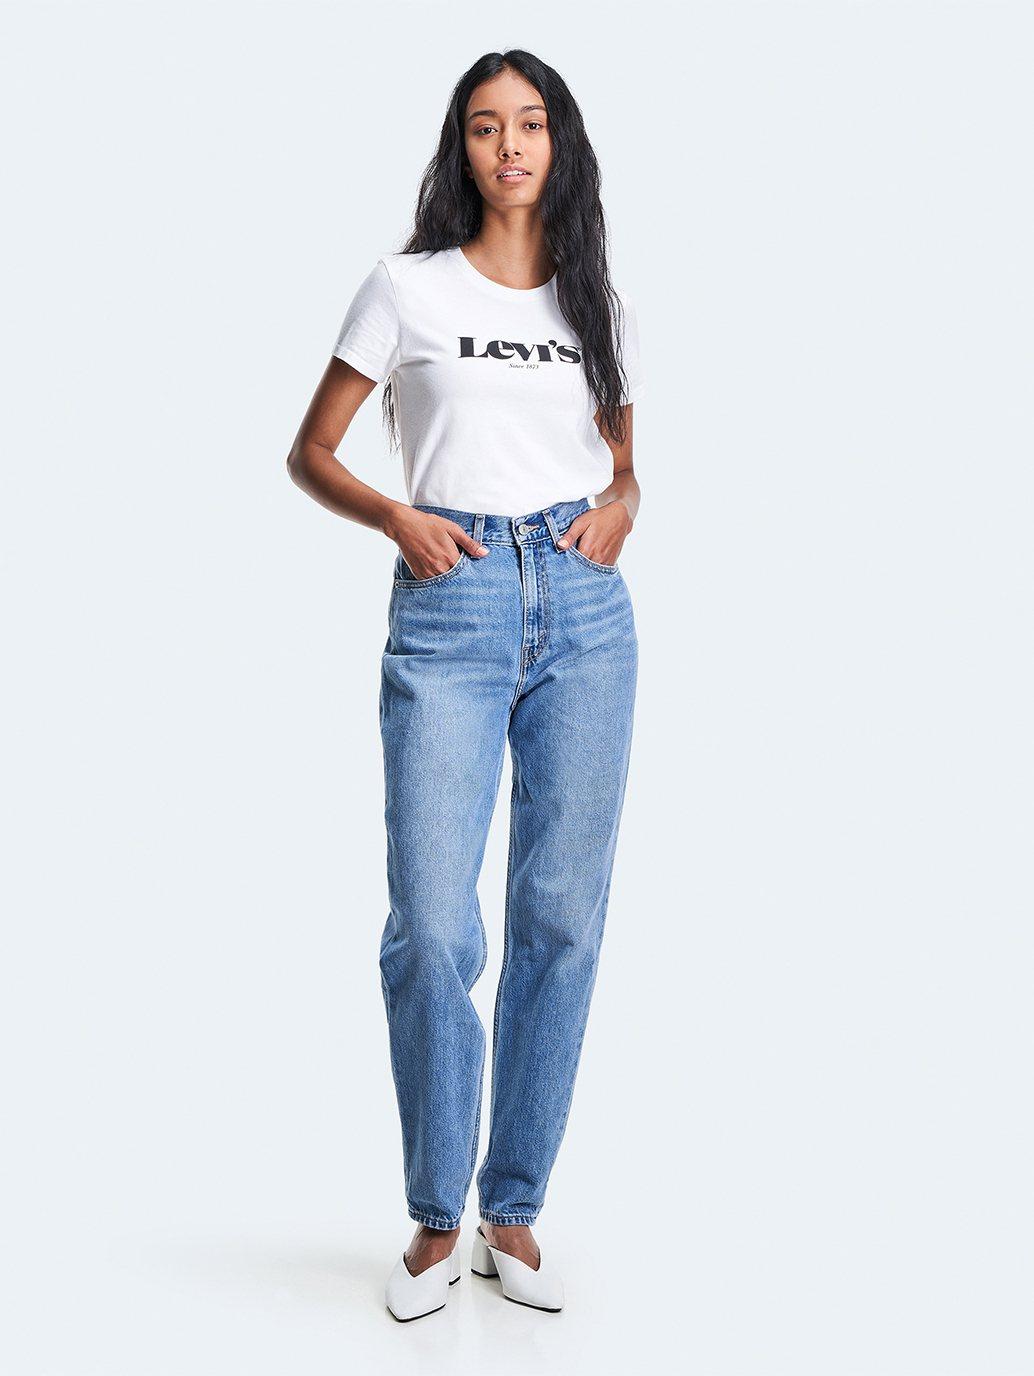 levis singapore womens 80s mom jeans A35060002 13 Details